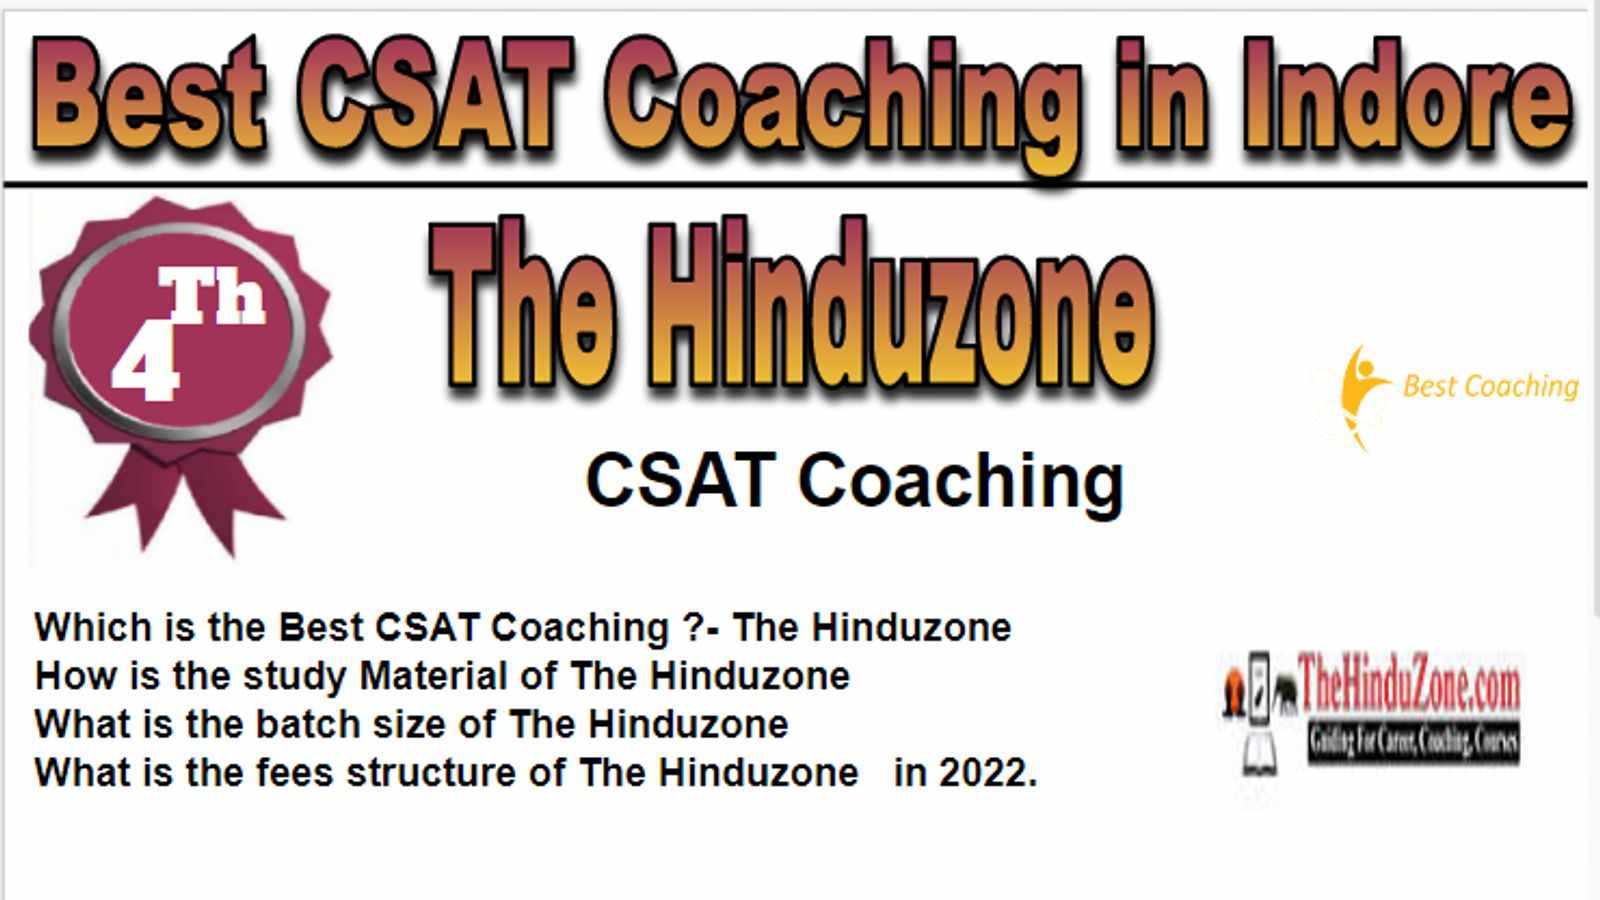 Rank 4 Best CSAT Coaching in Indore